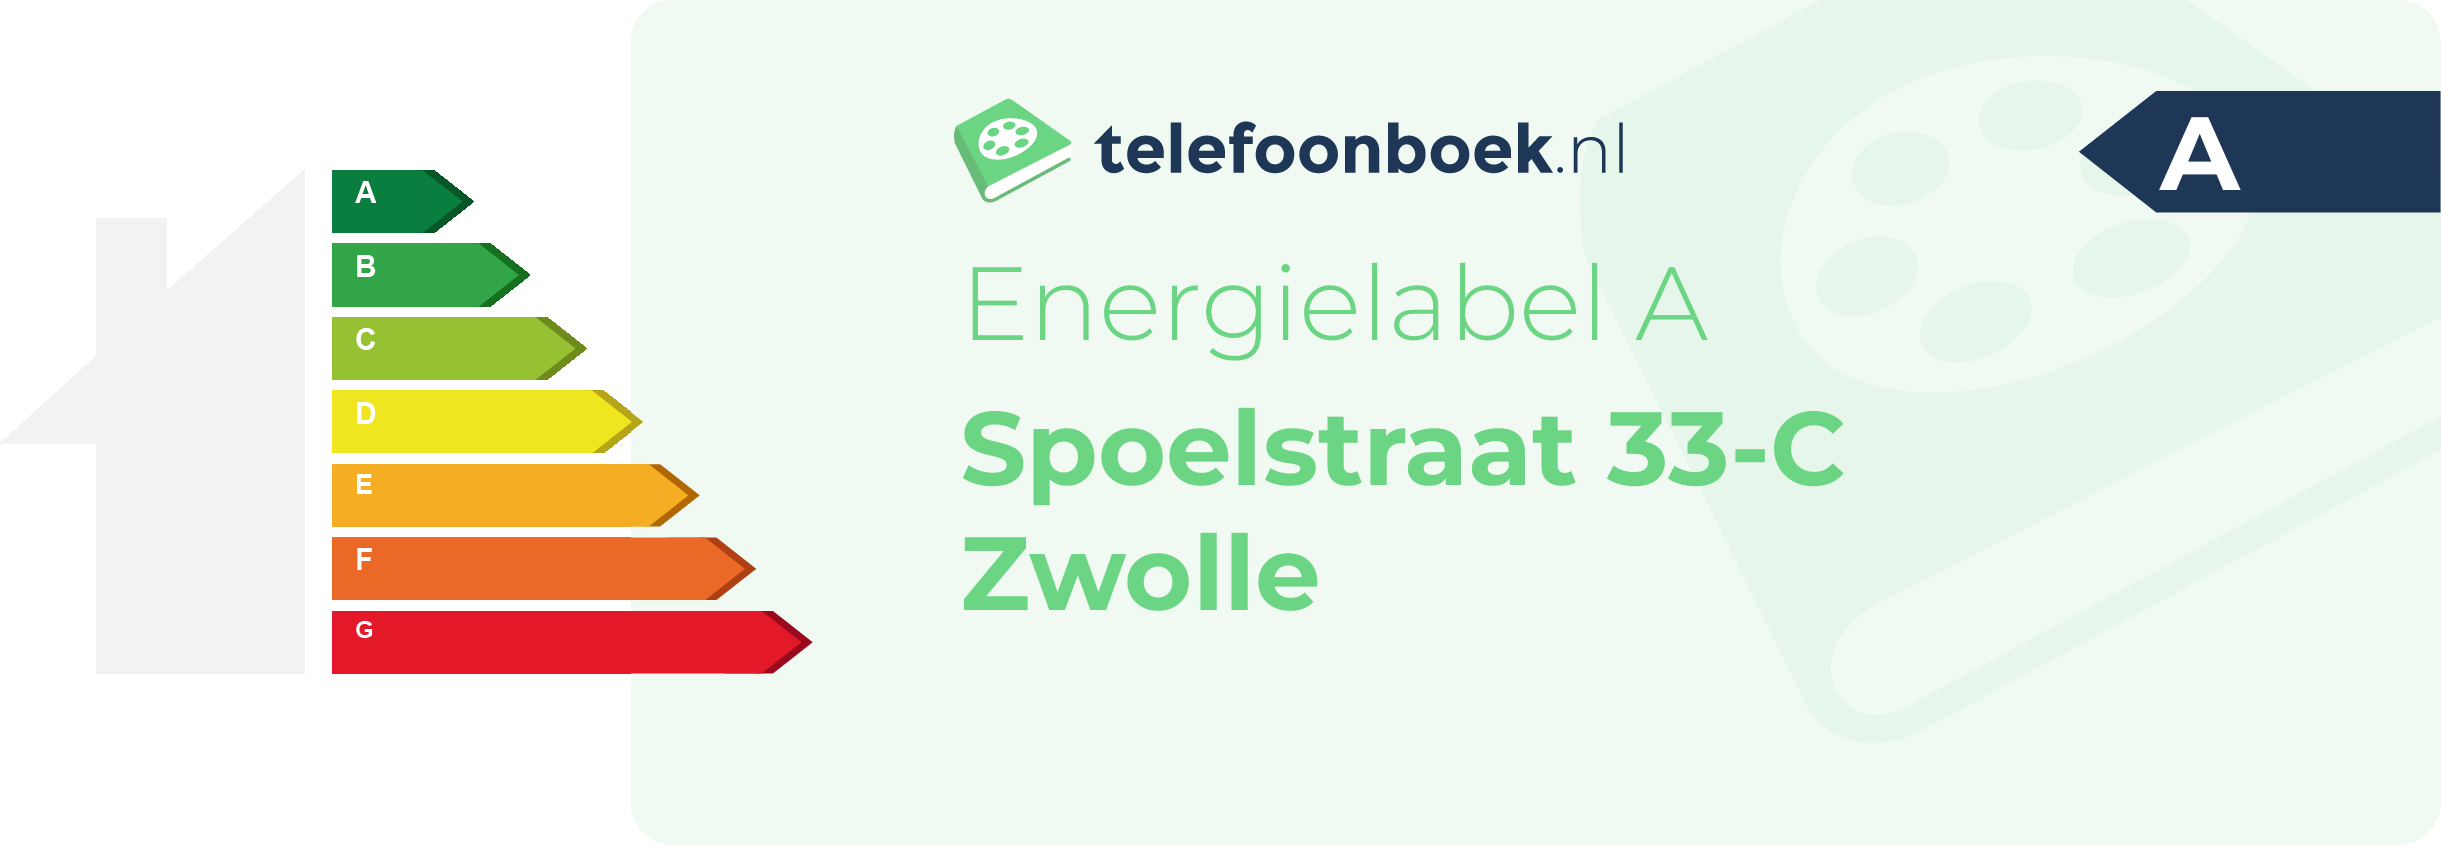 Energielabel Spoelstraat 33-C Zwolle